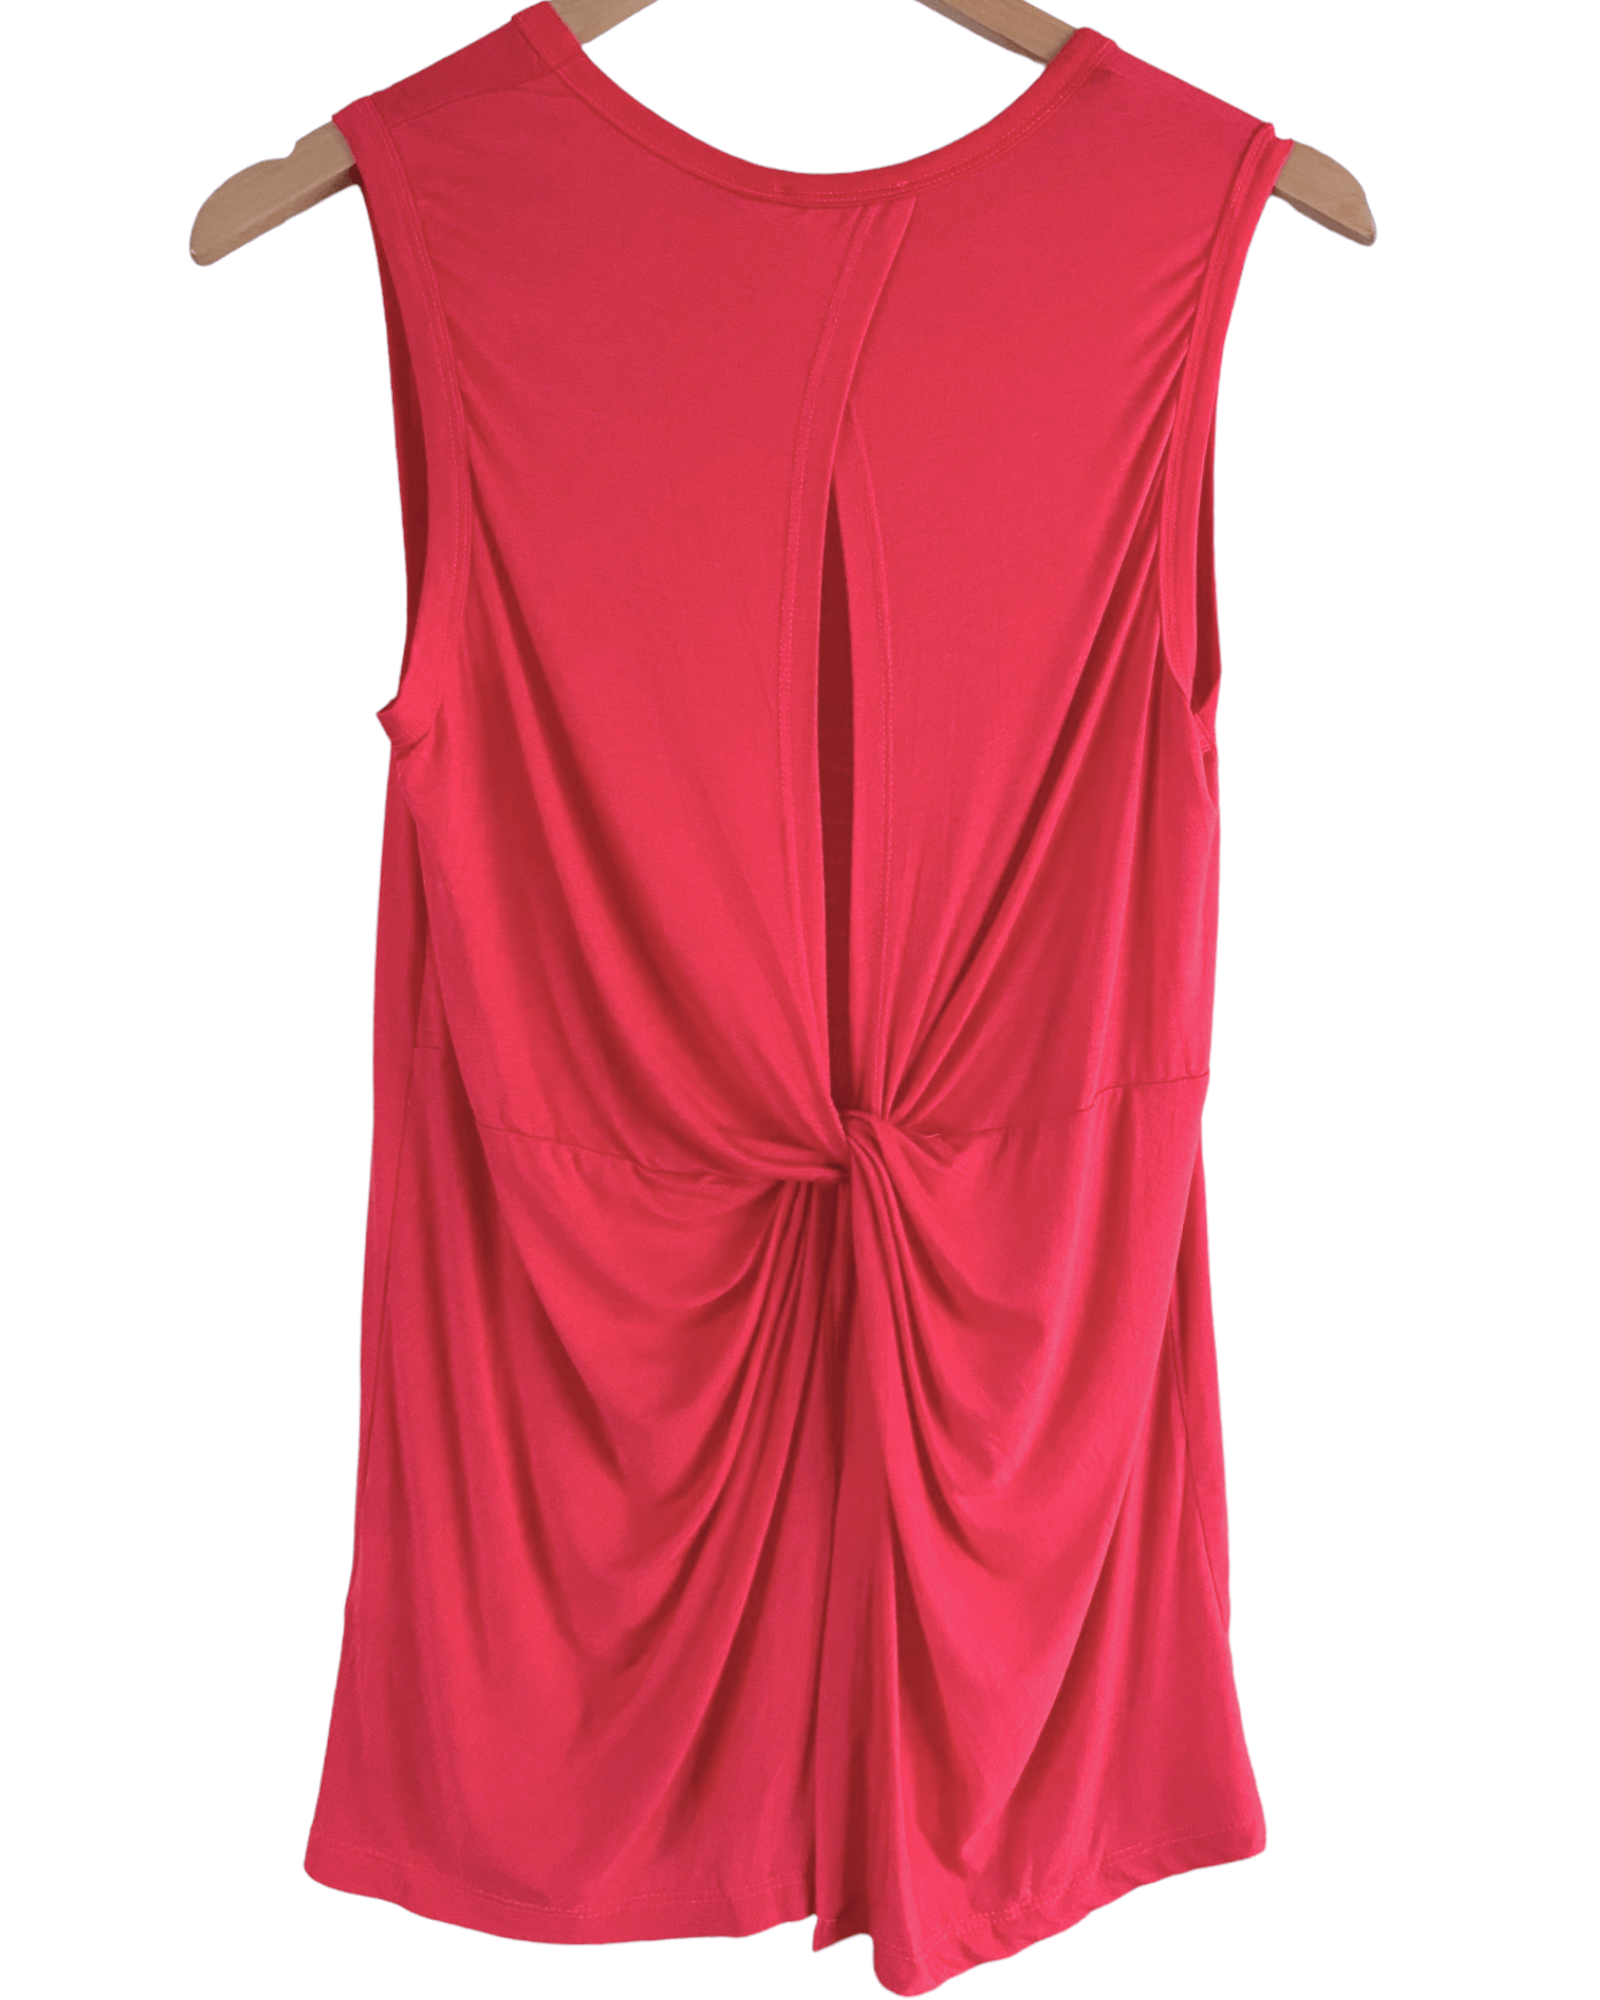 Warm Spring LUSH red twist-back sleeveless top